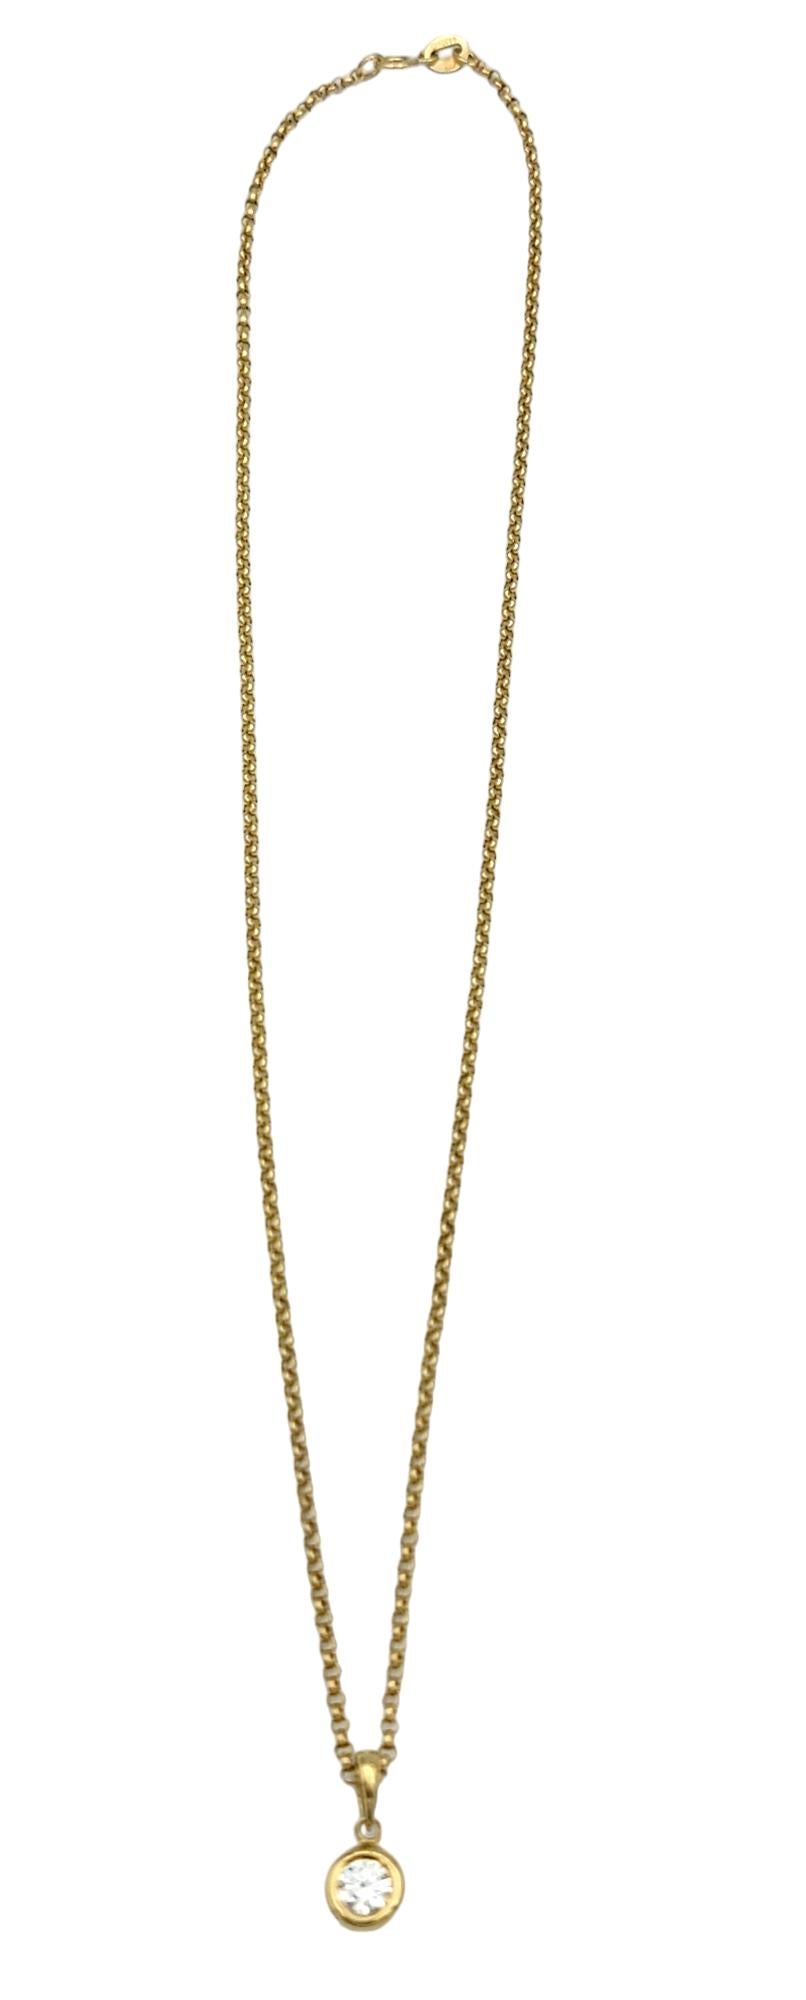 .34 Carat Bezel-Set Round Diamond Solitaire Pendant Necklace in 18 Karat Gold In Good Condition For Sale In Scottsdale, AZ